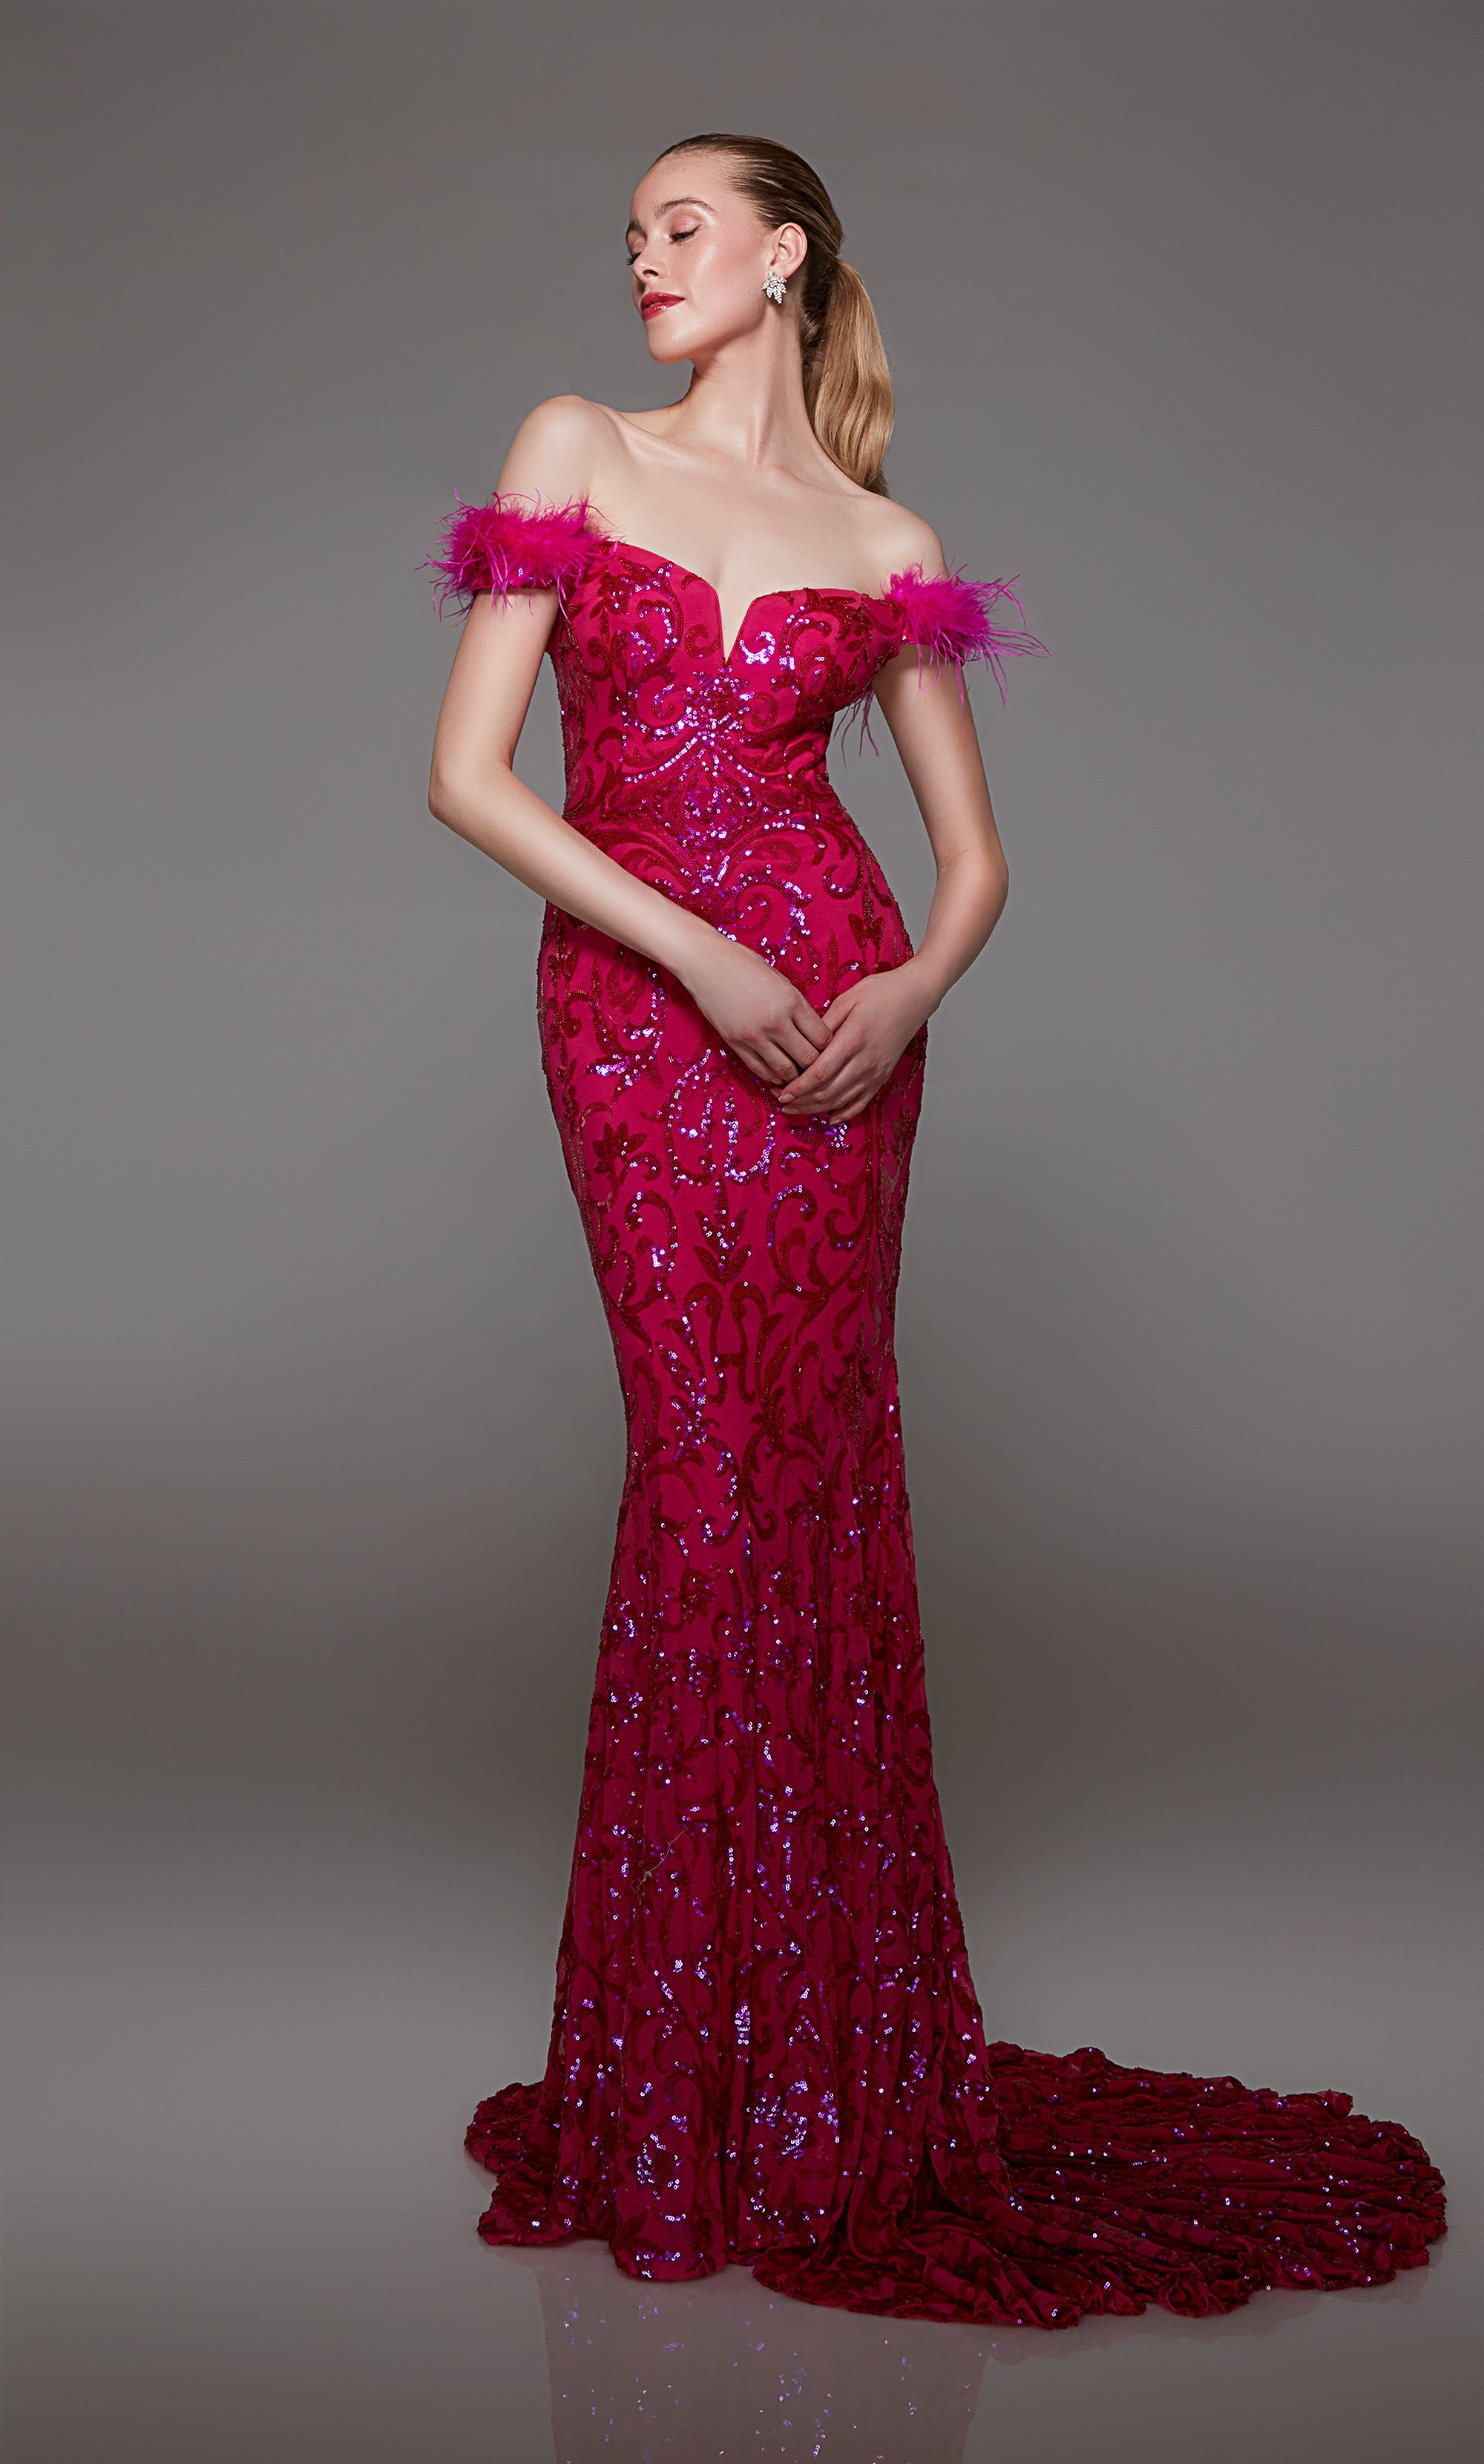 Off Shoulder Formal Dresses with Big Rose Flower Strapless Side Slit Pink  Evening Gowns Elegant Celebrate Party Night Out Dress - AliExpress